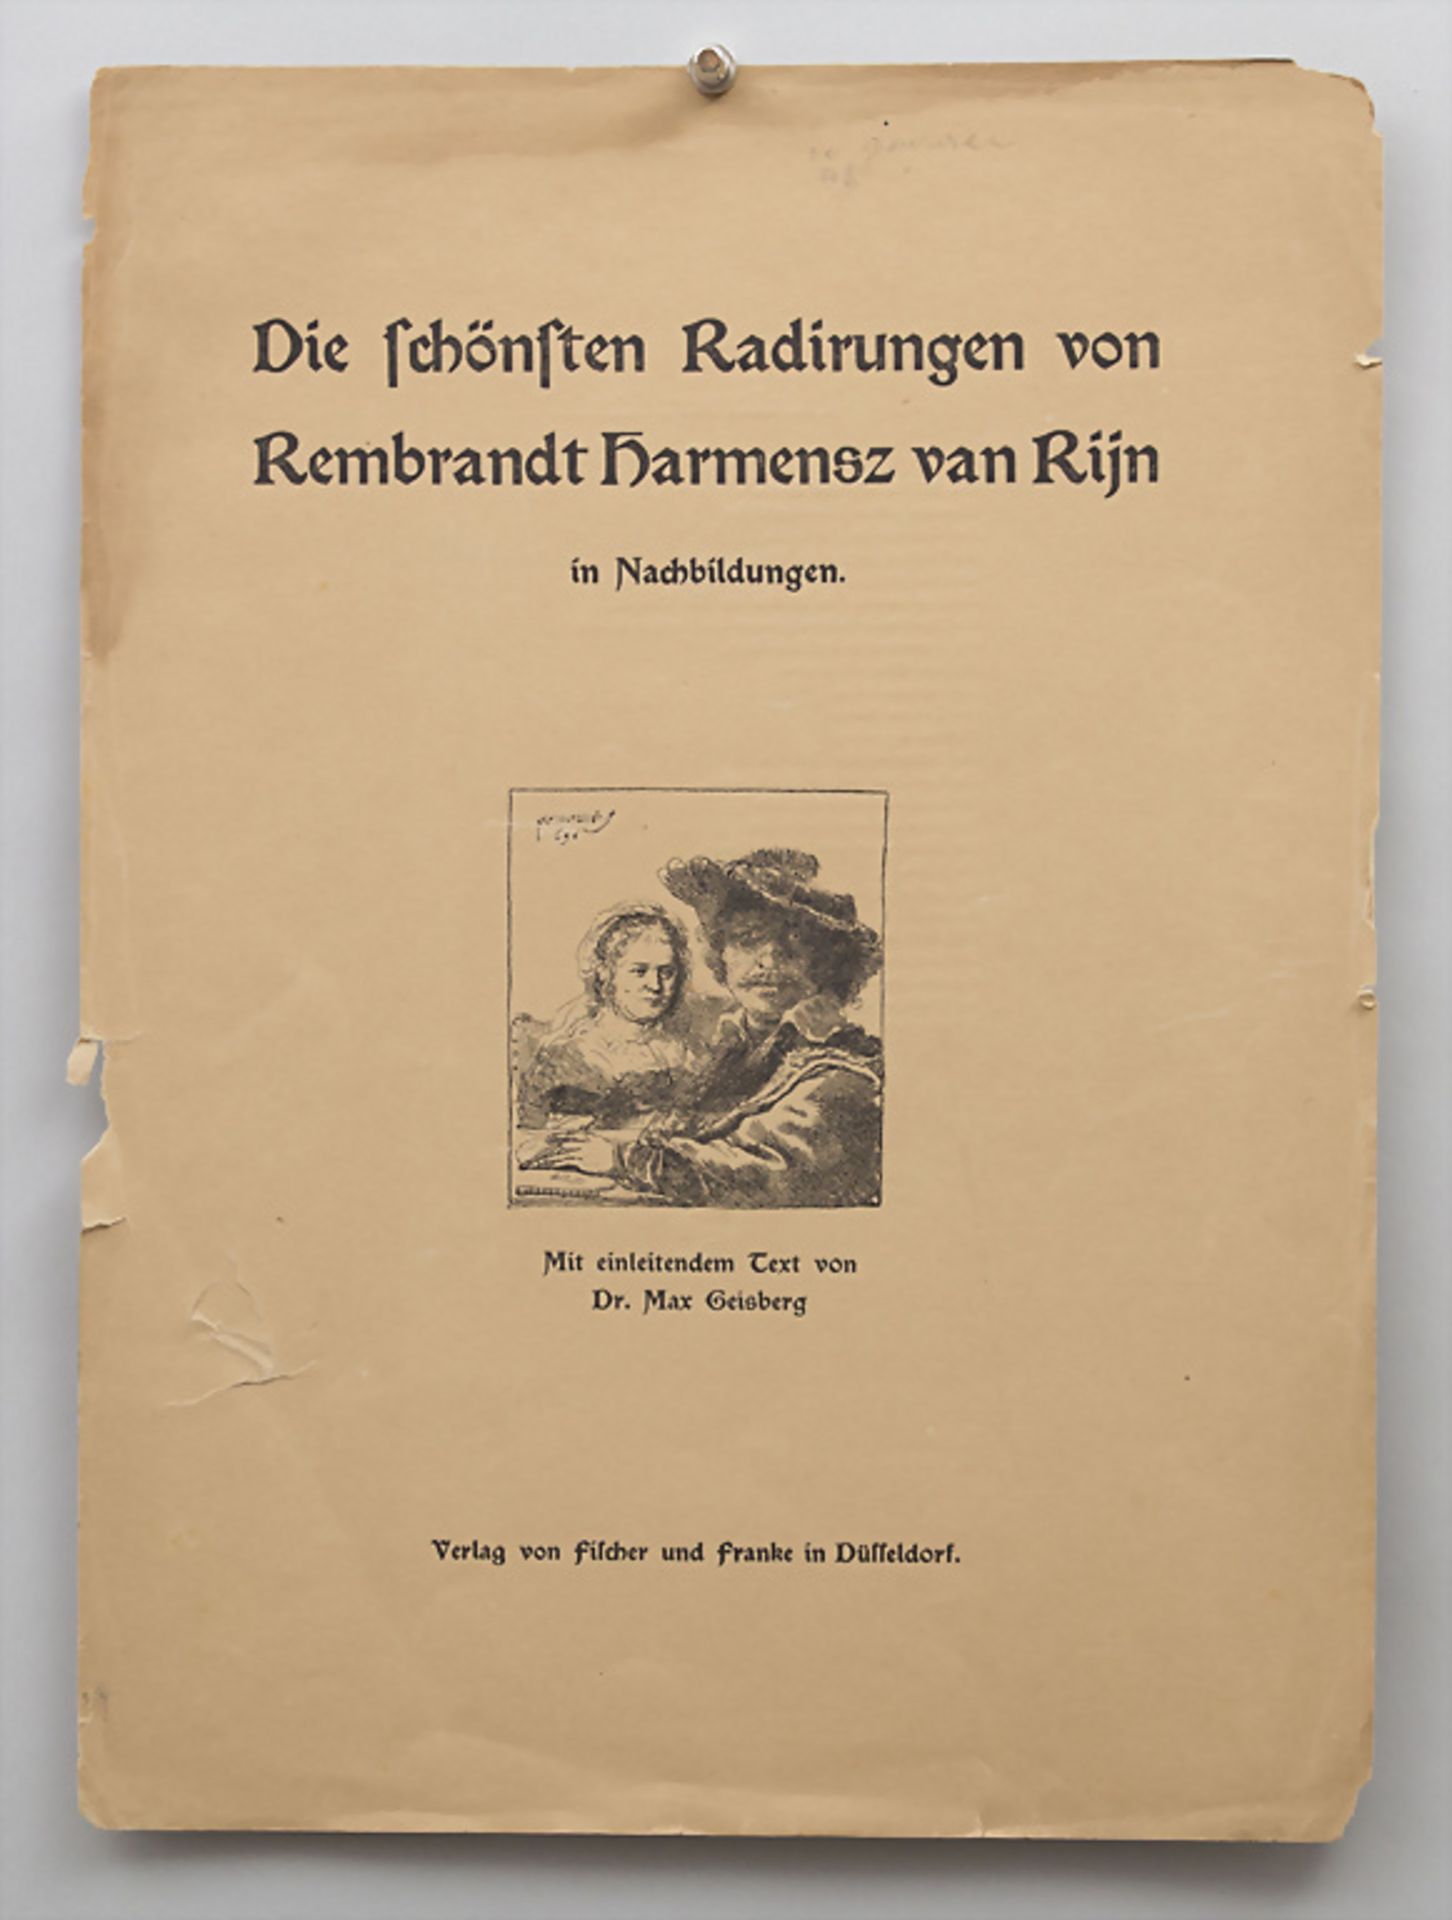 Rembrandt Harmensz van Rijn, 'Die schönsten Radierungen von Rembrandt Harmensz van Rijn', 1903 - Image 2 of 5